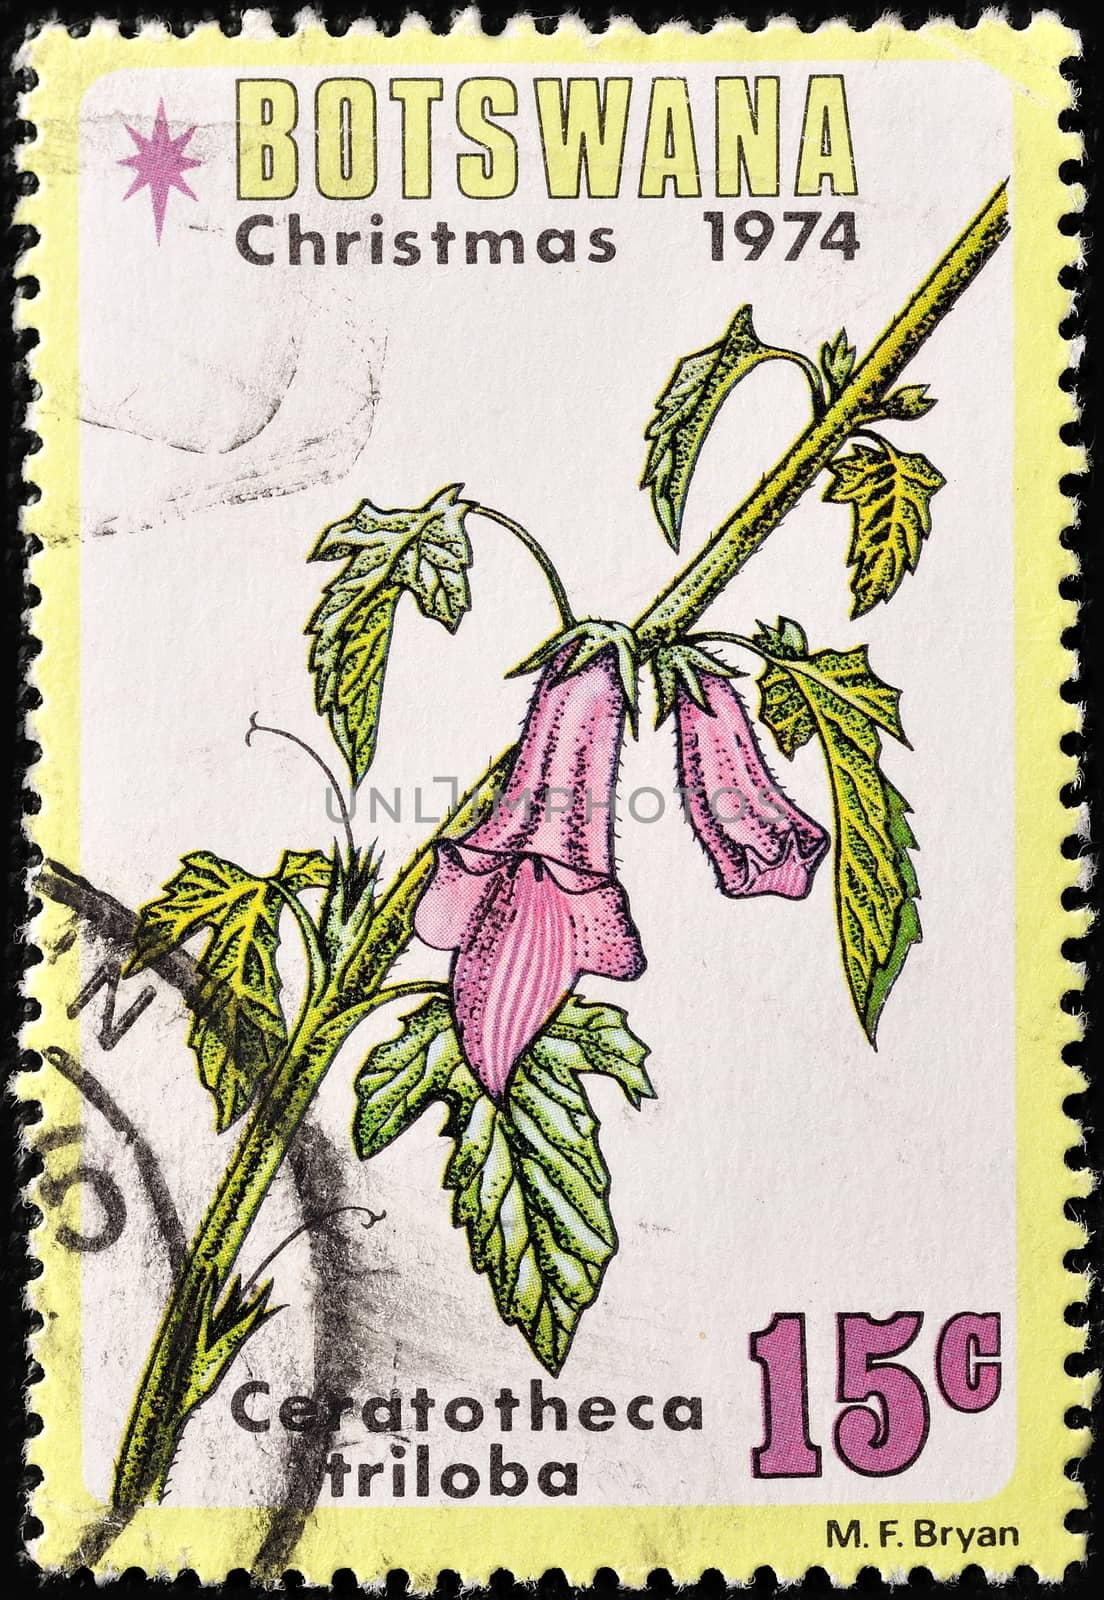 BOTSWANA - CIRCA 1974: A Stamp printed in Botswana a shows image "Cerathopeca triloba", in 1974